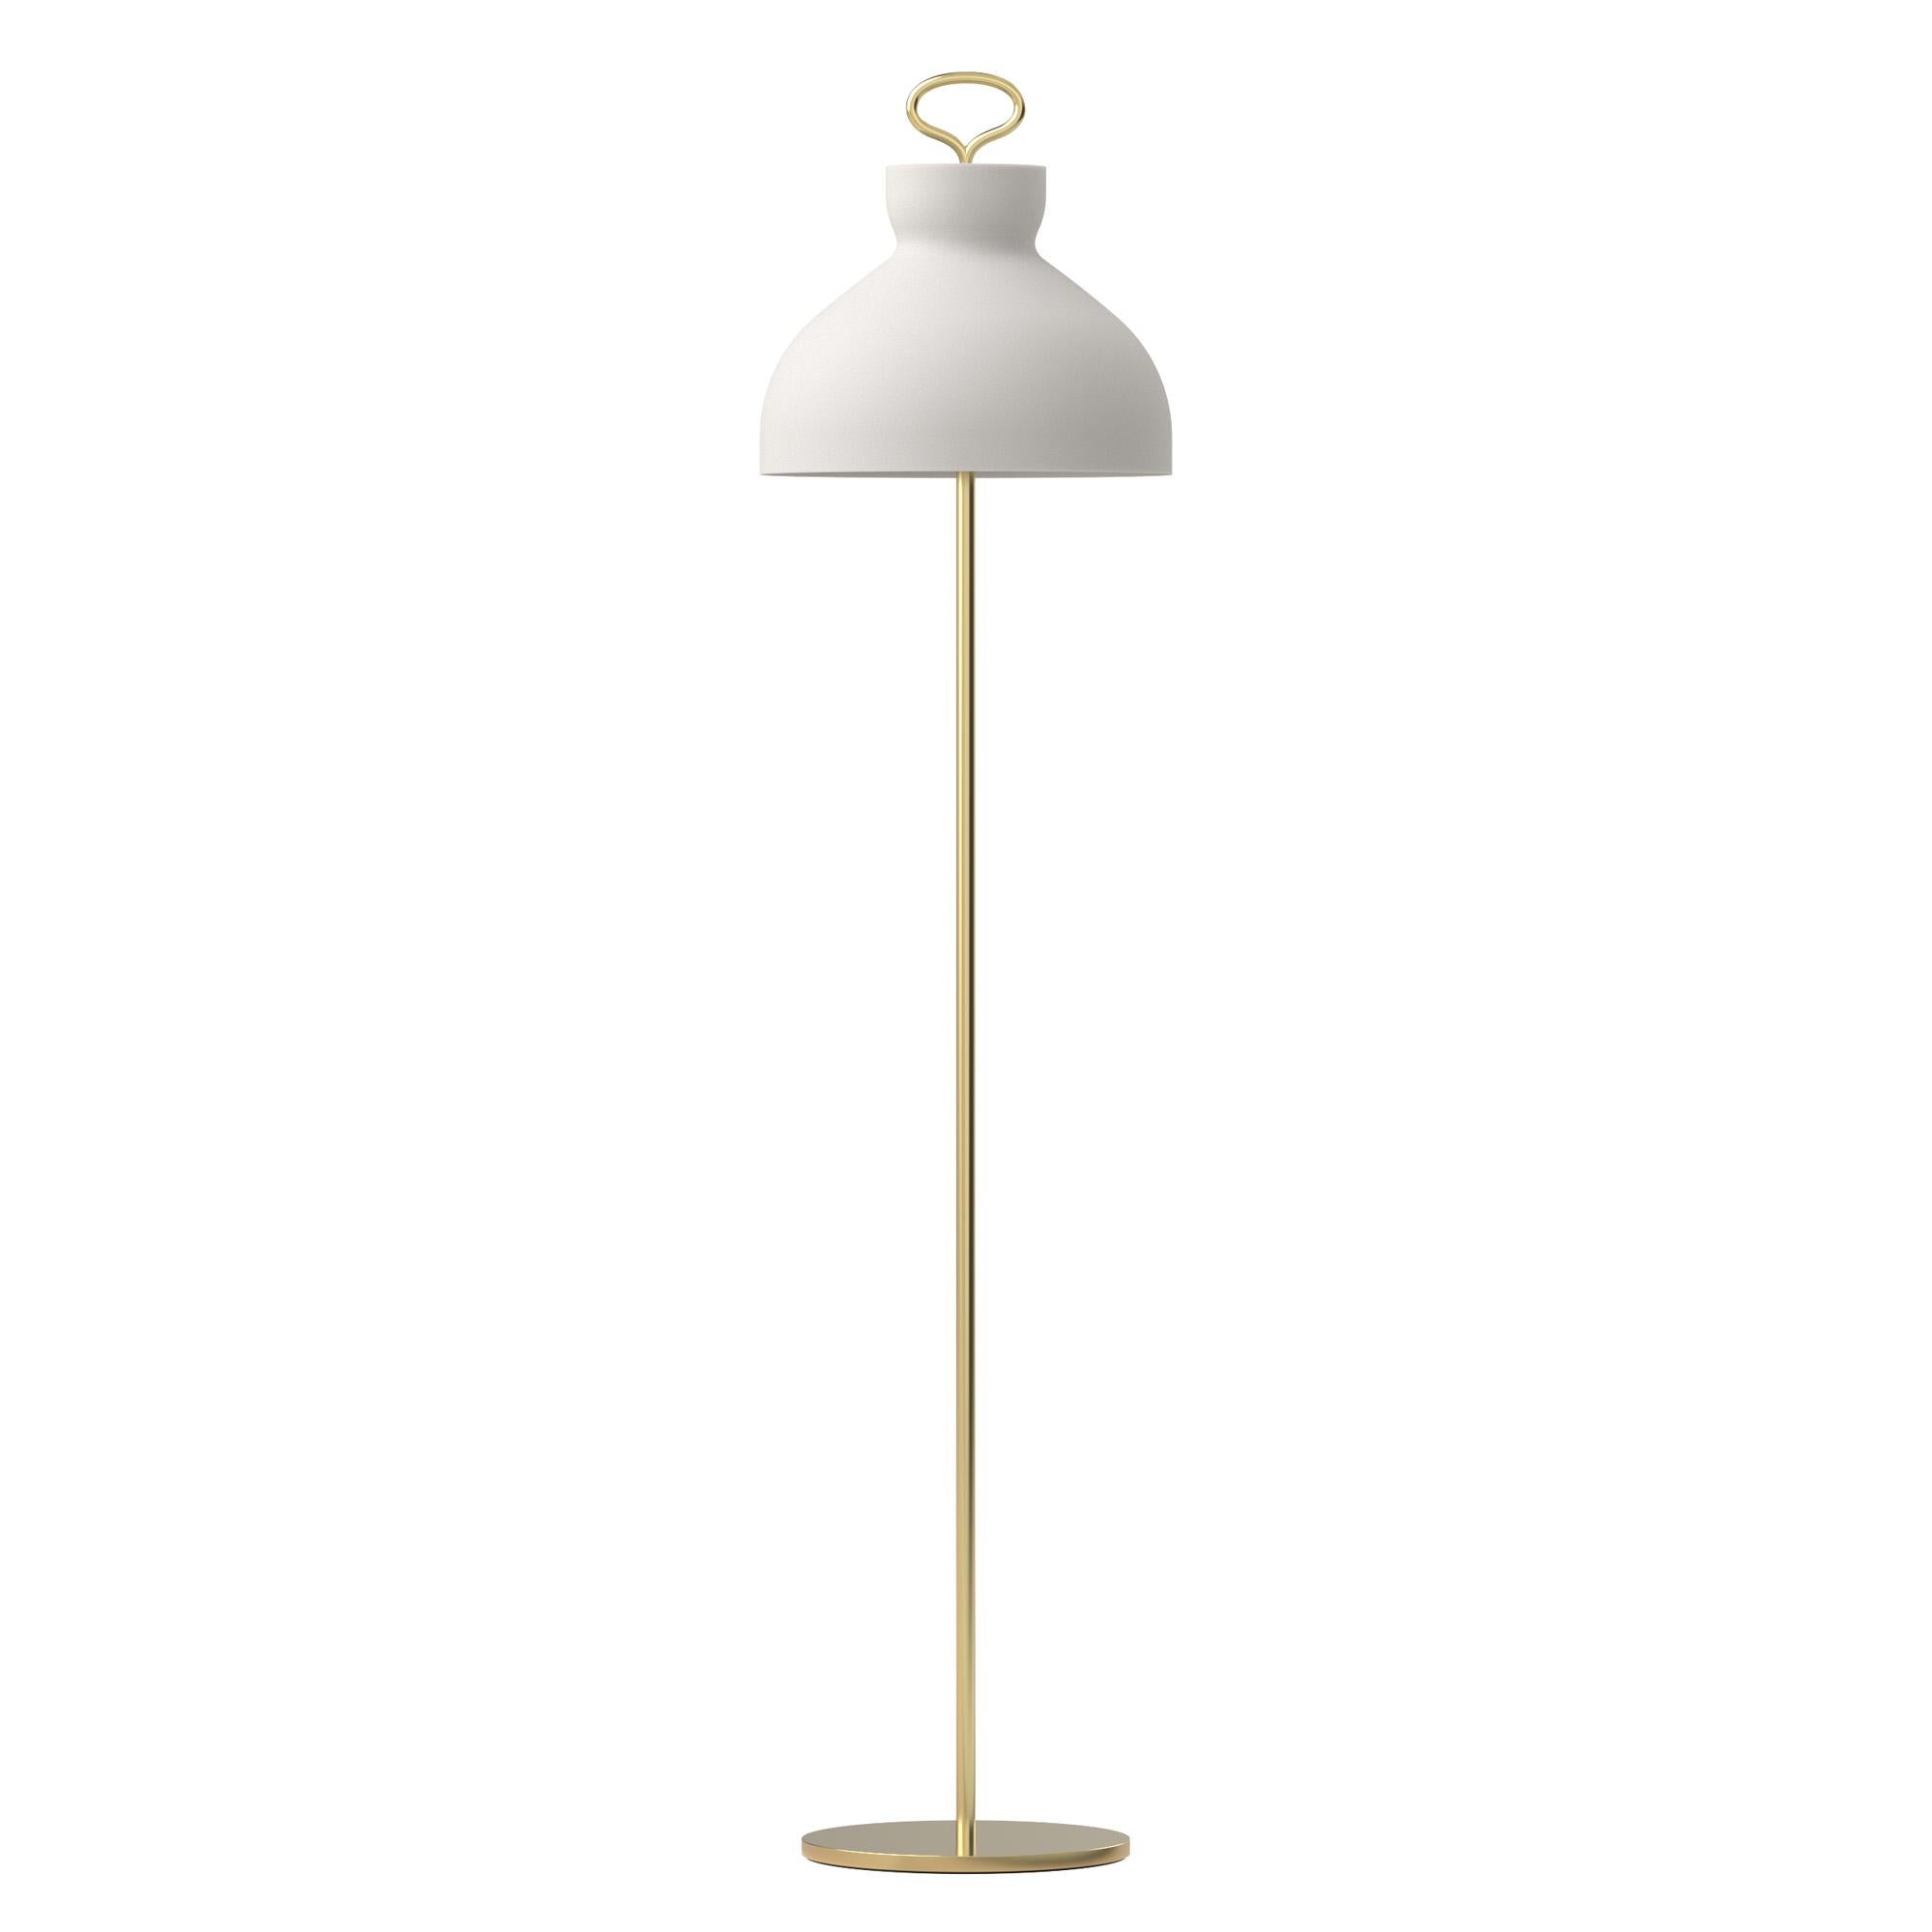 Italian Ignazio Gardella 'Arenzano Terra' Floor Lamp in Brass and Glass For Sale